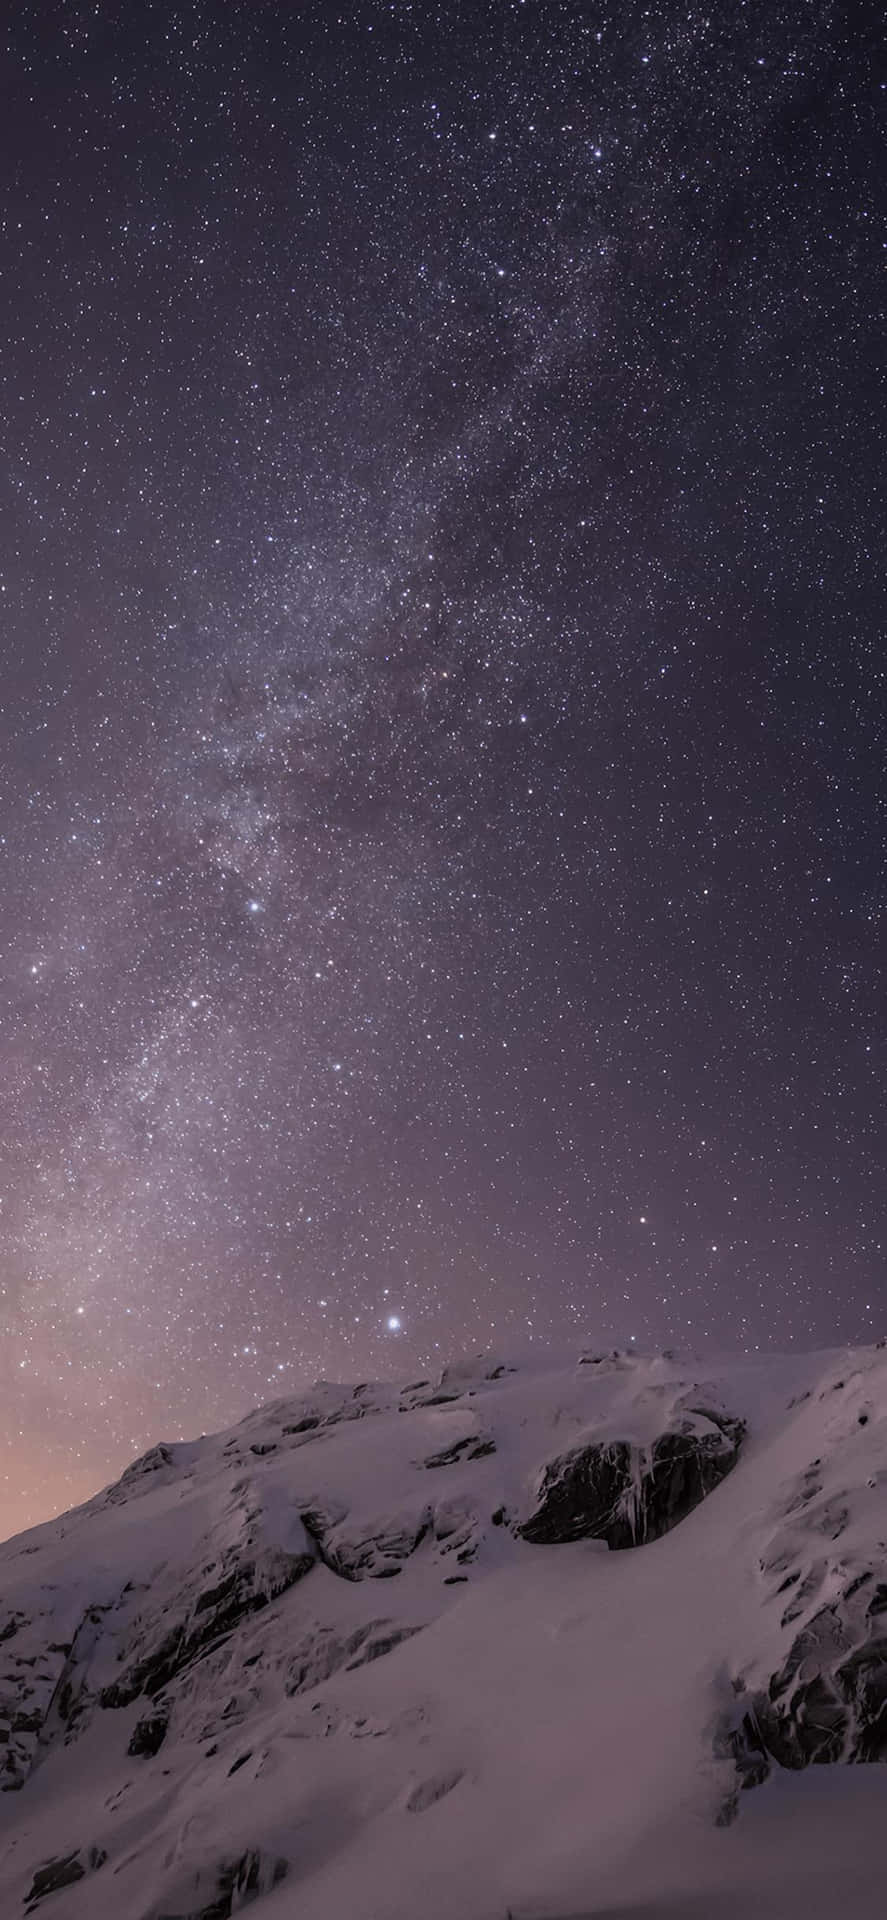 Starry_ Night_ Over_ Snowy_ Mountain_ Peaks Wallpaper